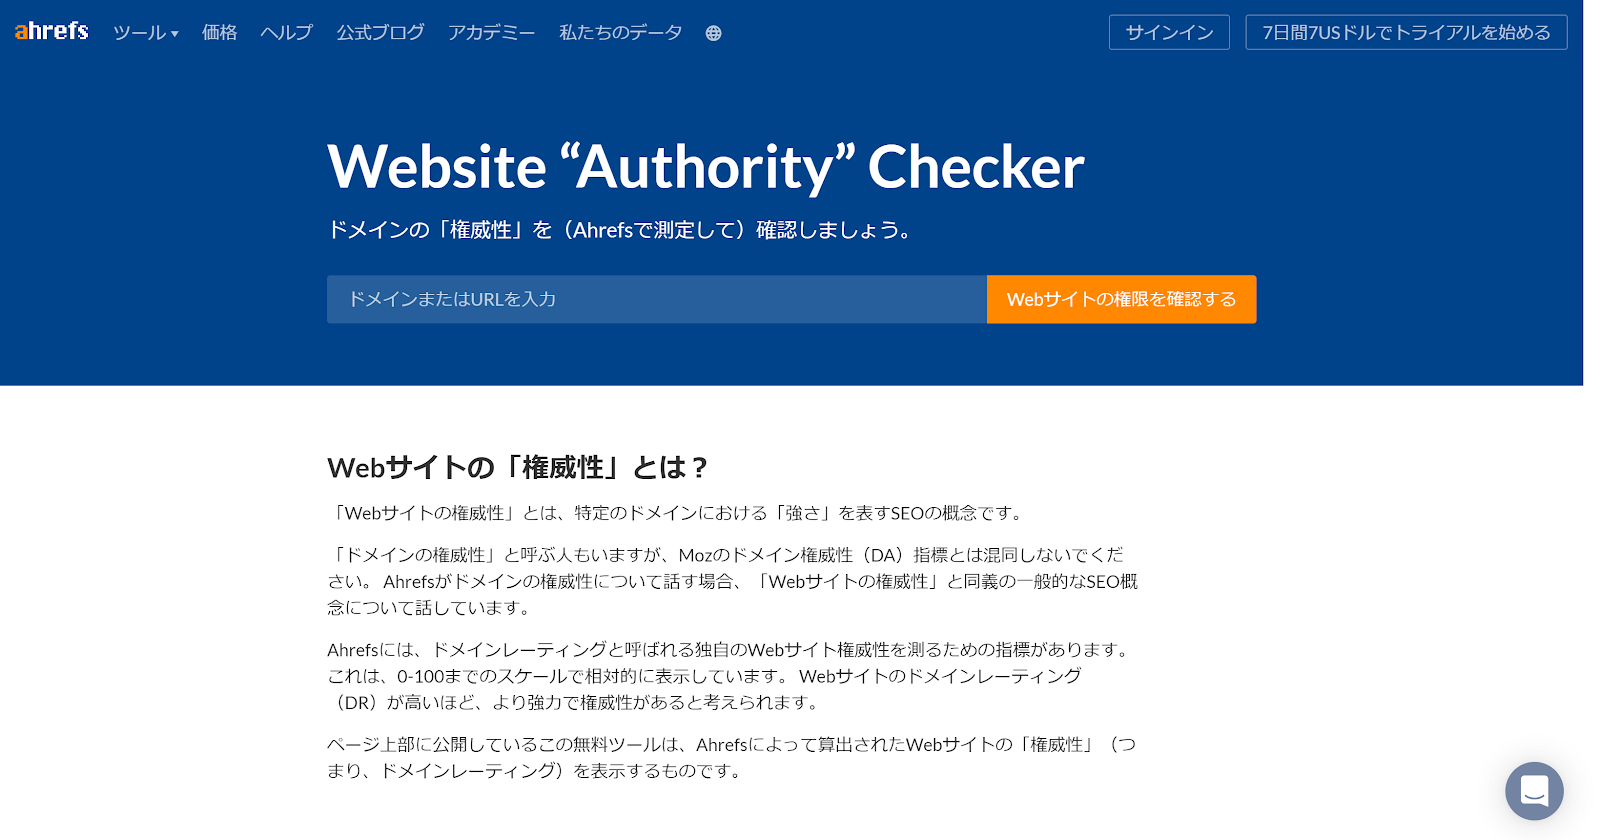 Website “Authority” Checker